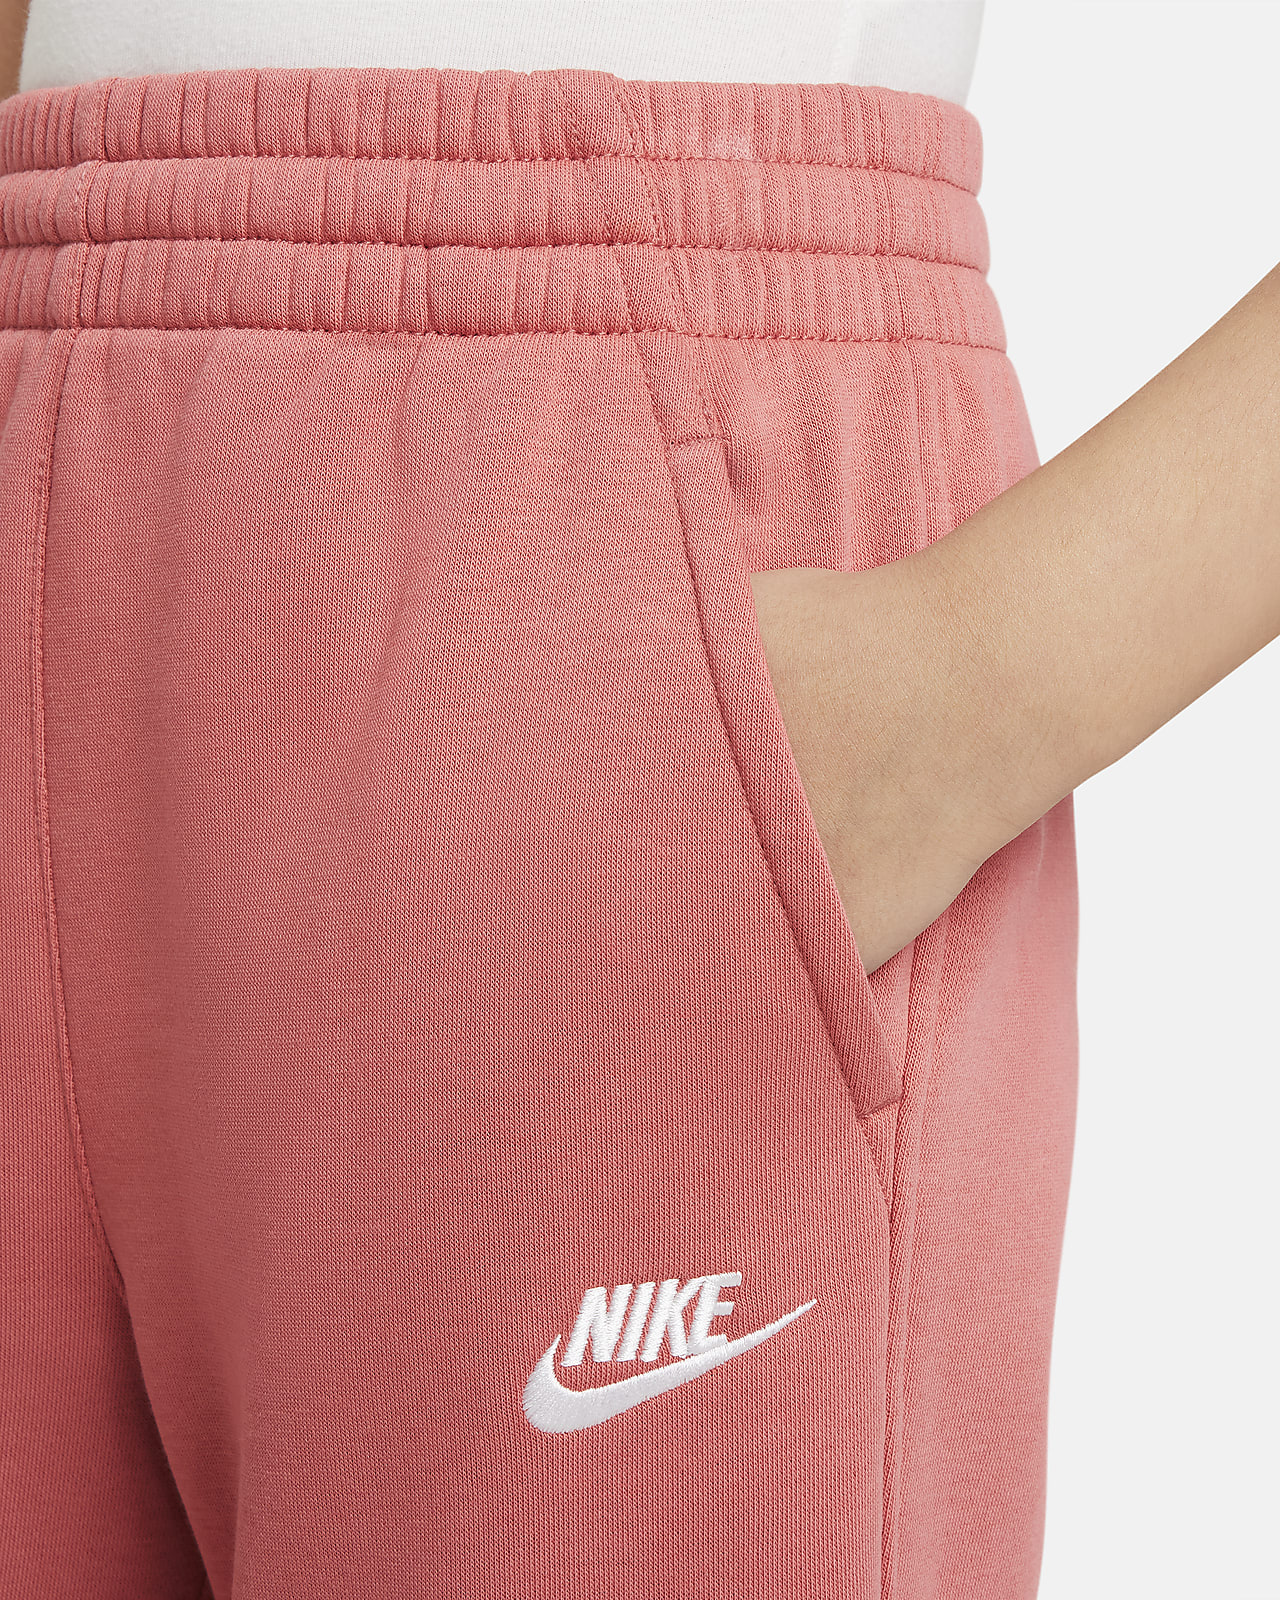 Nike Sportswear Big Kids' (Girls') Flare Pants. Nike.com